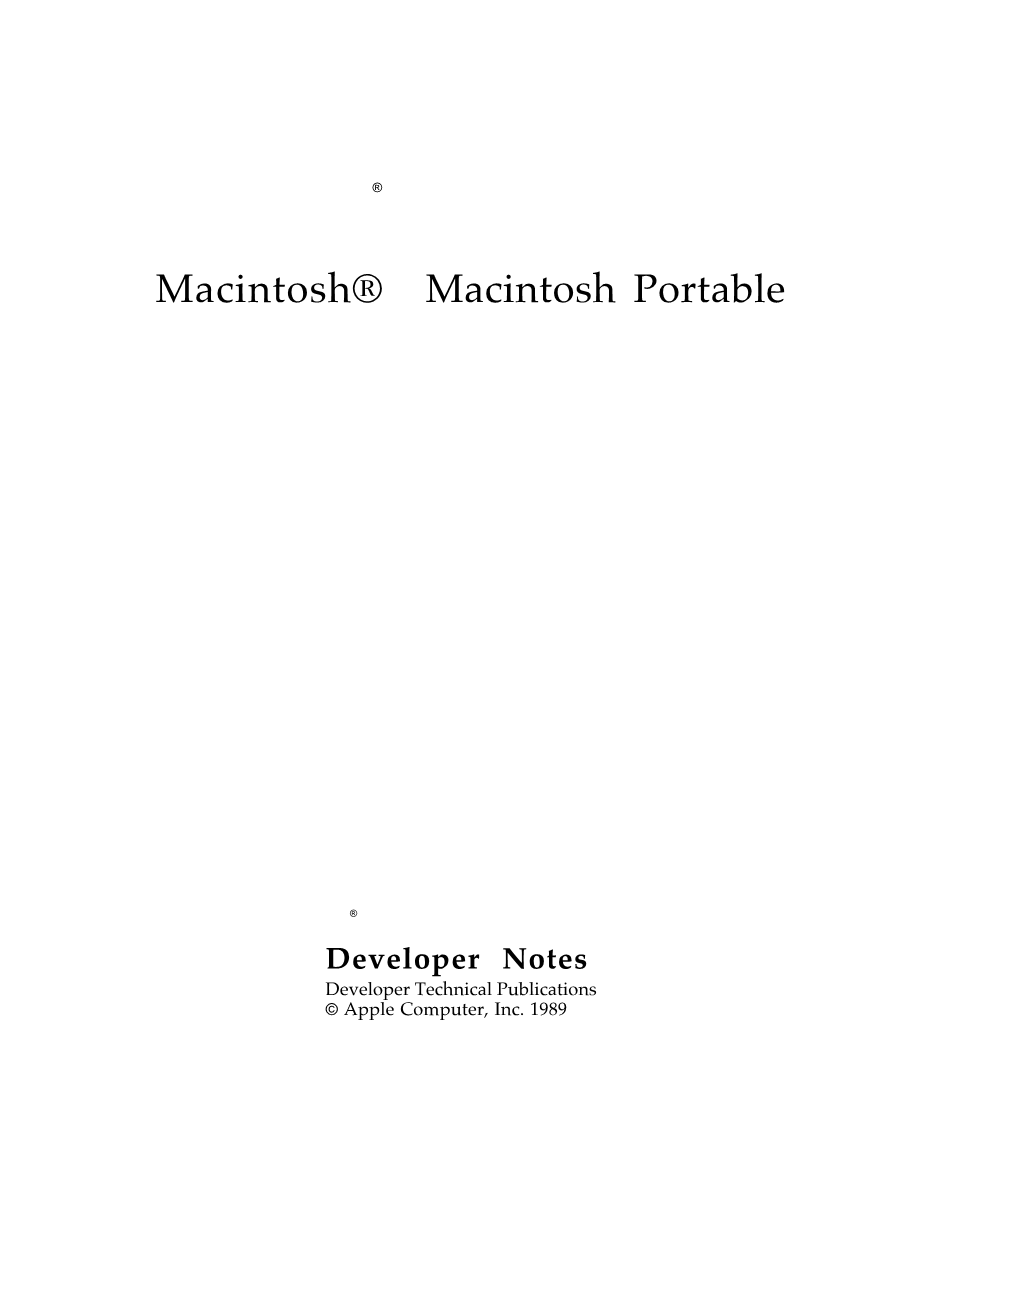 Macintosh® Macintosh Portable